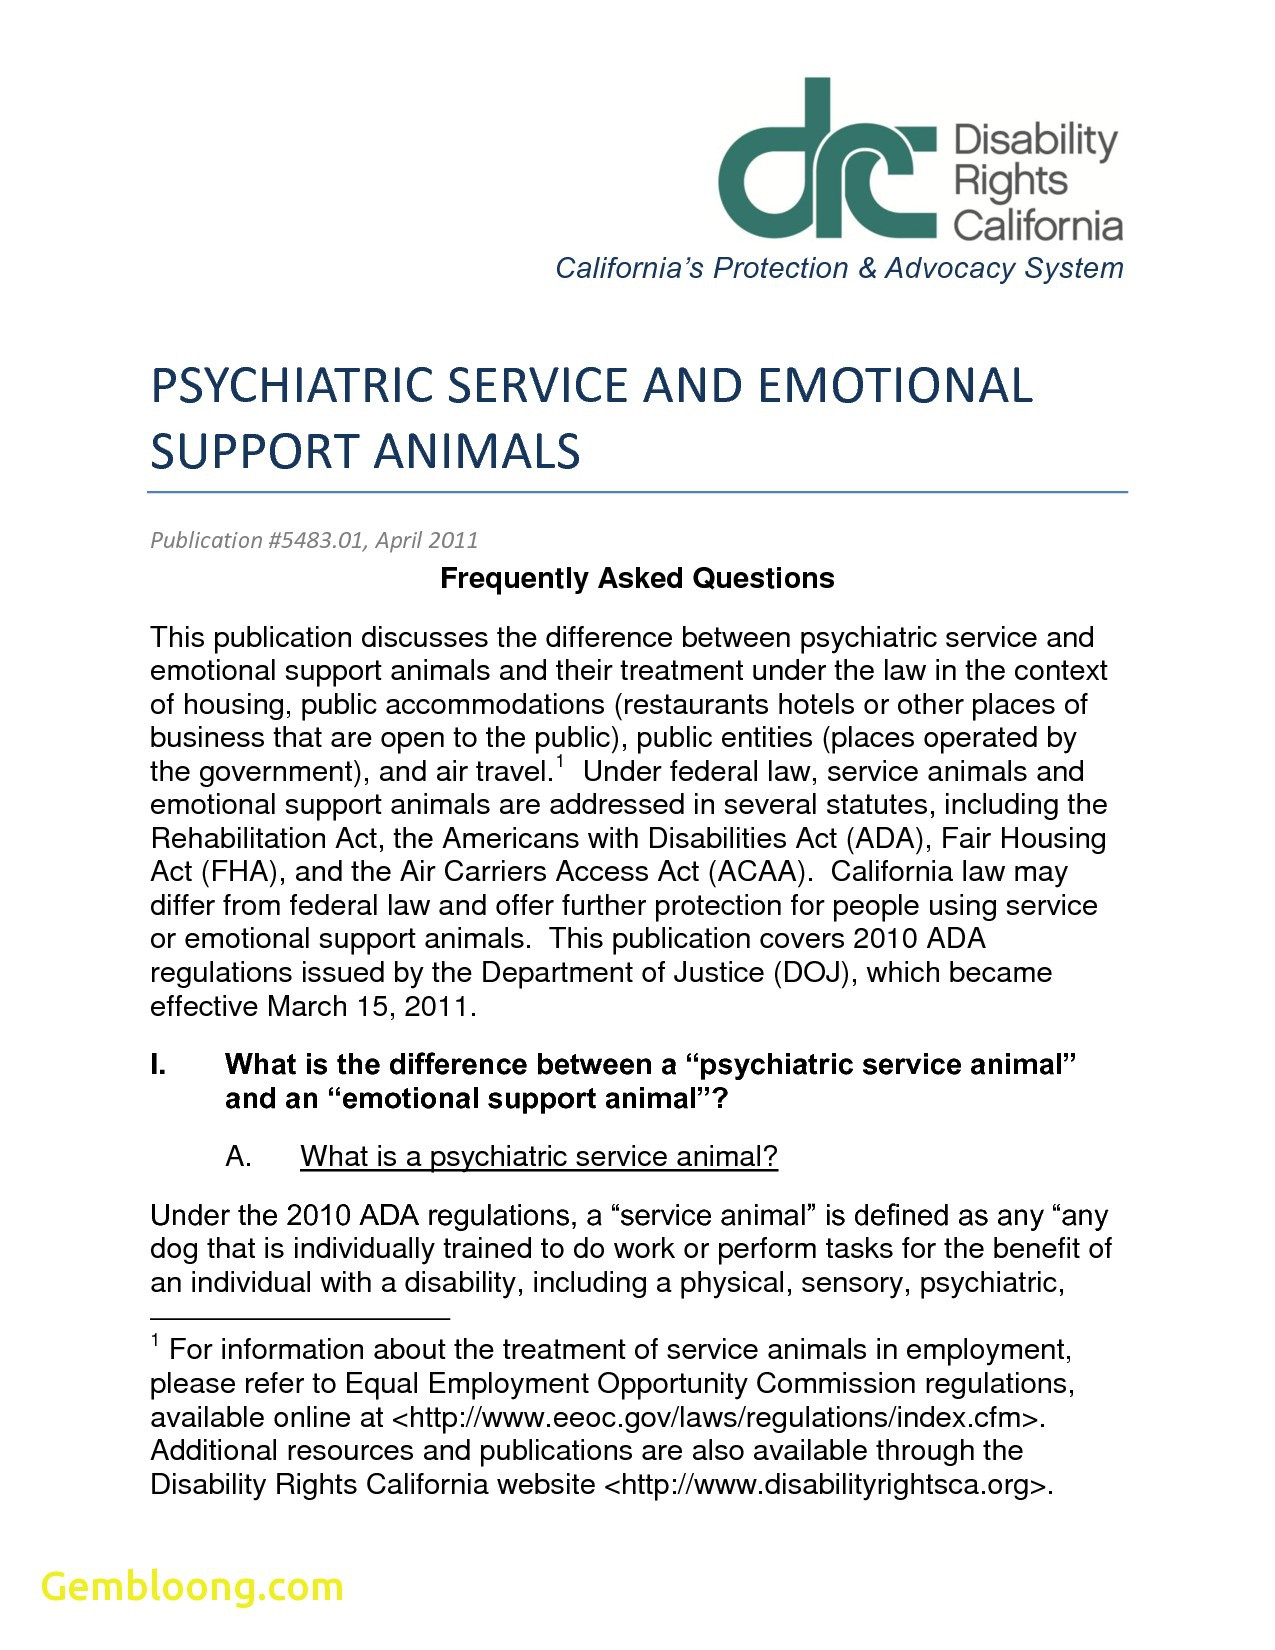 Emotional Support Letter Template - Staggering Emotional assistance Animal Letter